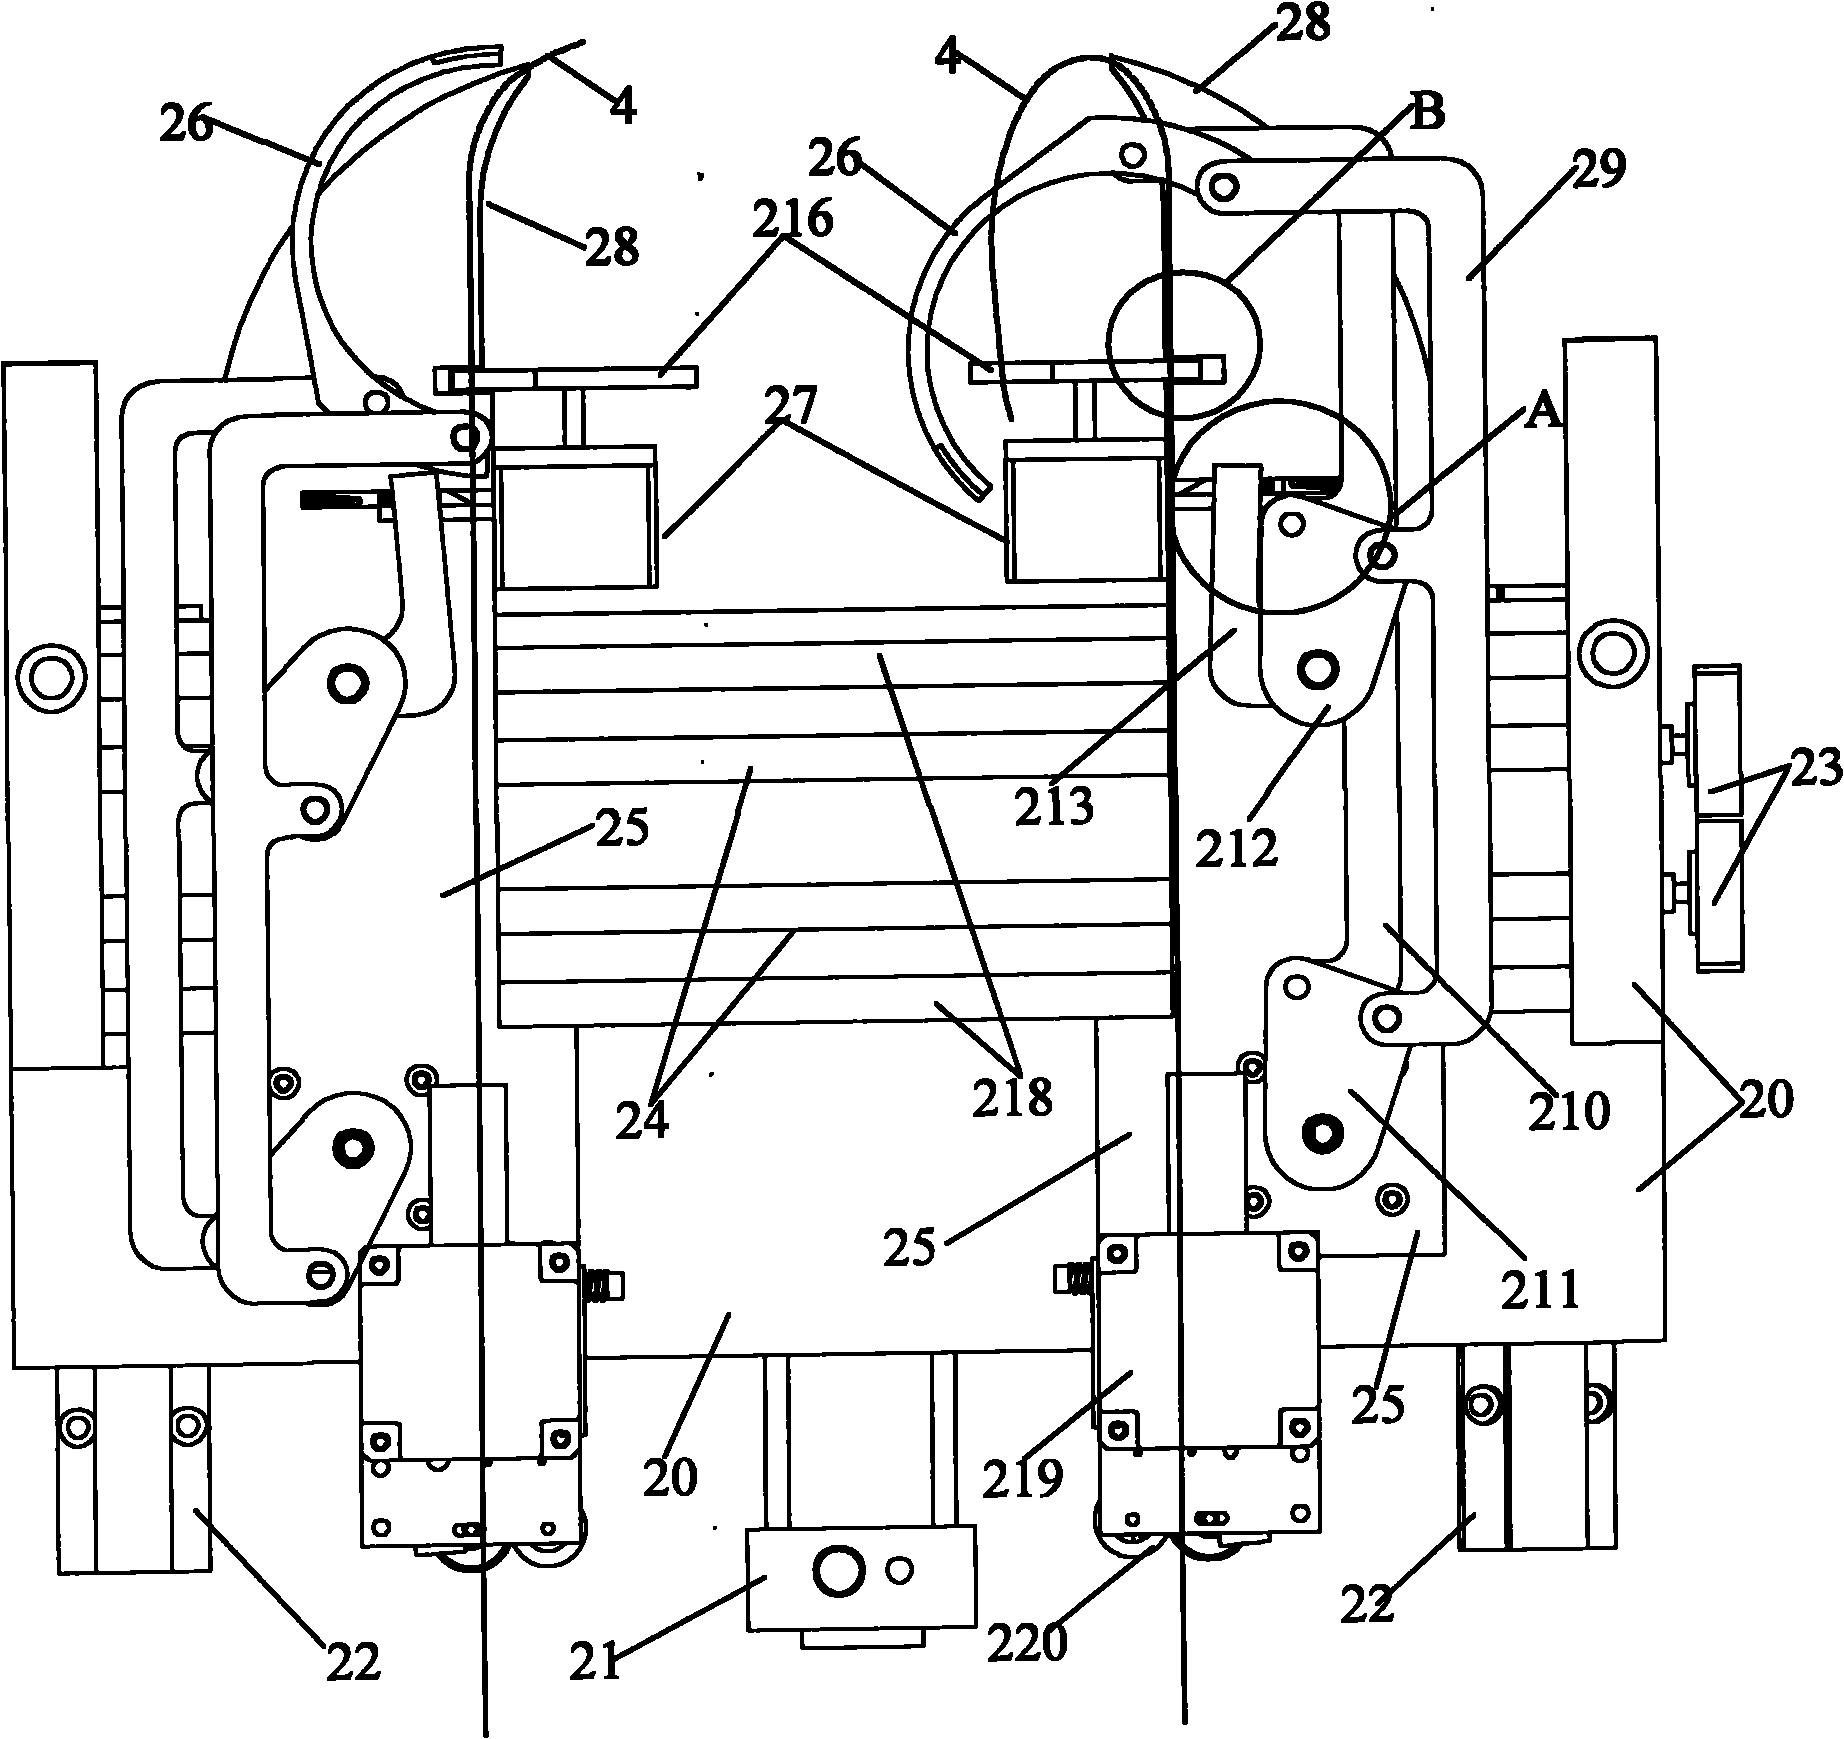 Connection line binding machine